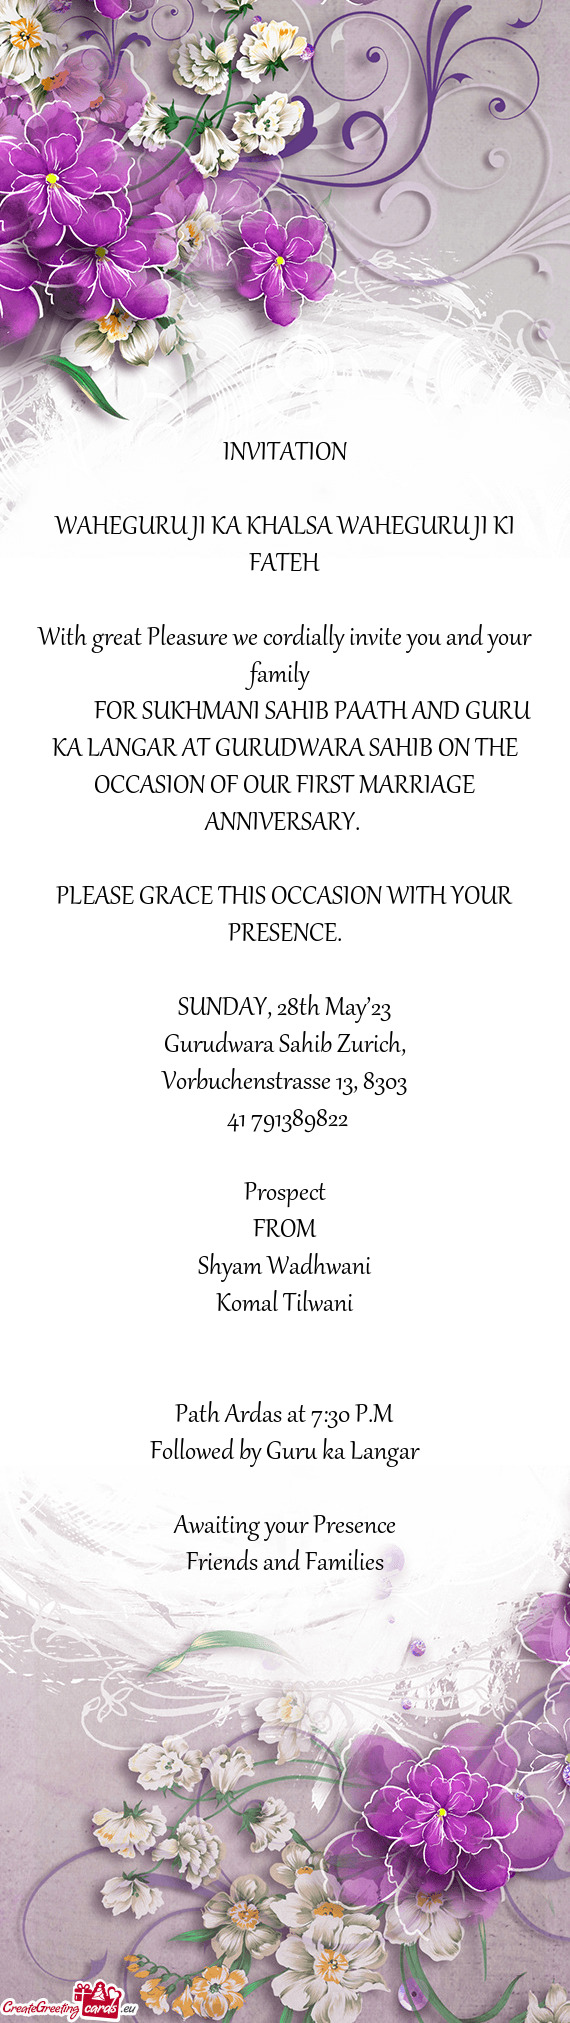 FOR SUKHMANI SAHIB PAATH AND GURU KA LANGAR AT GURUDWARA SAHIB ON THE OCCASION OF OUR FIR